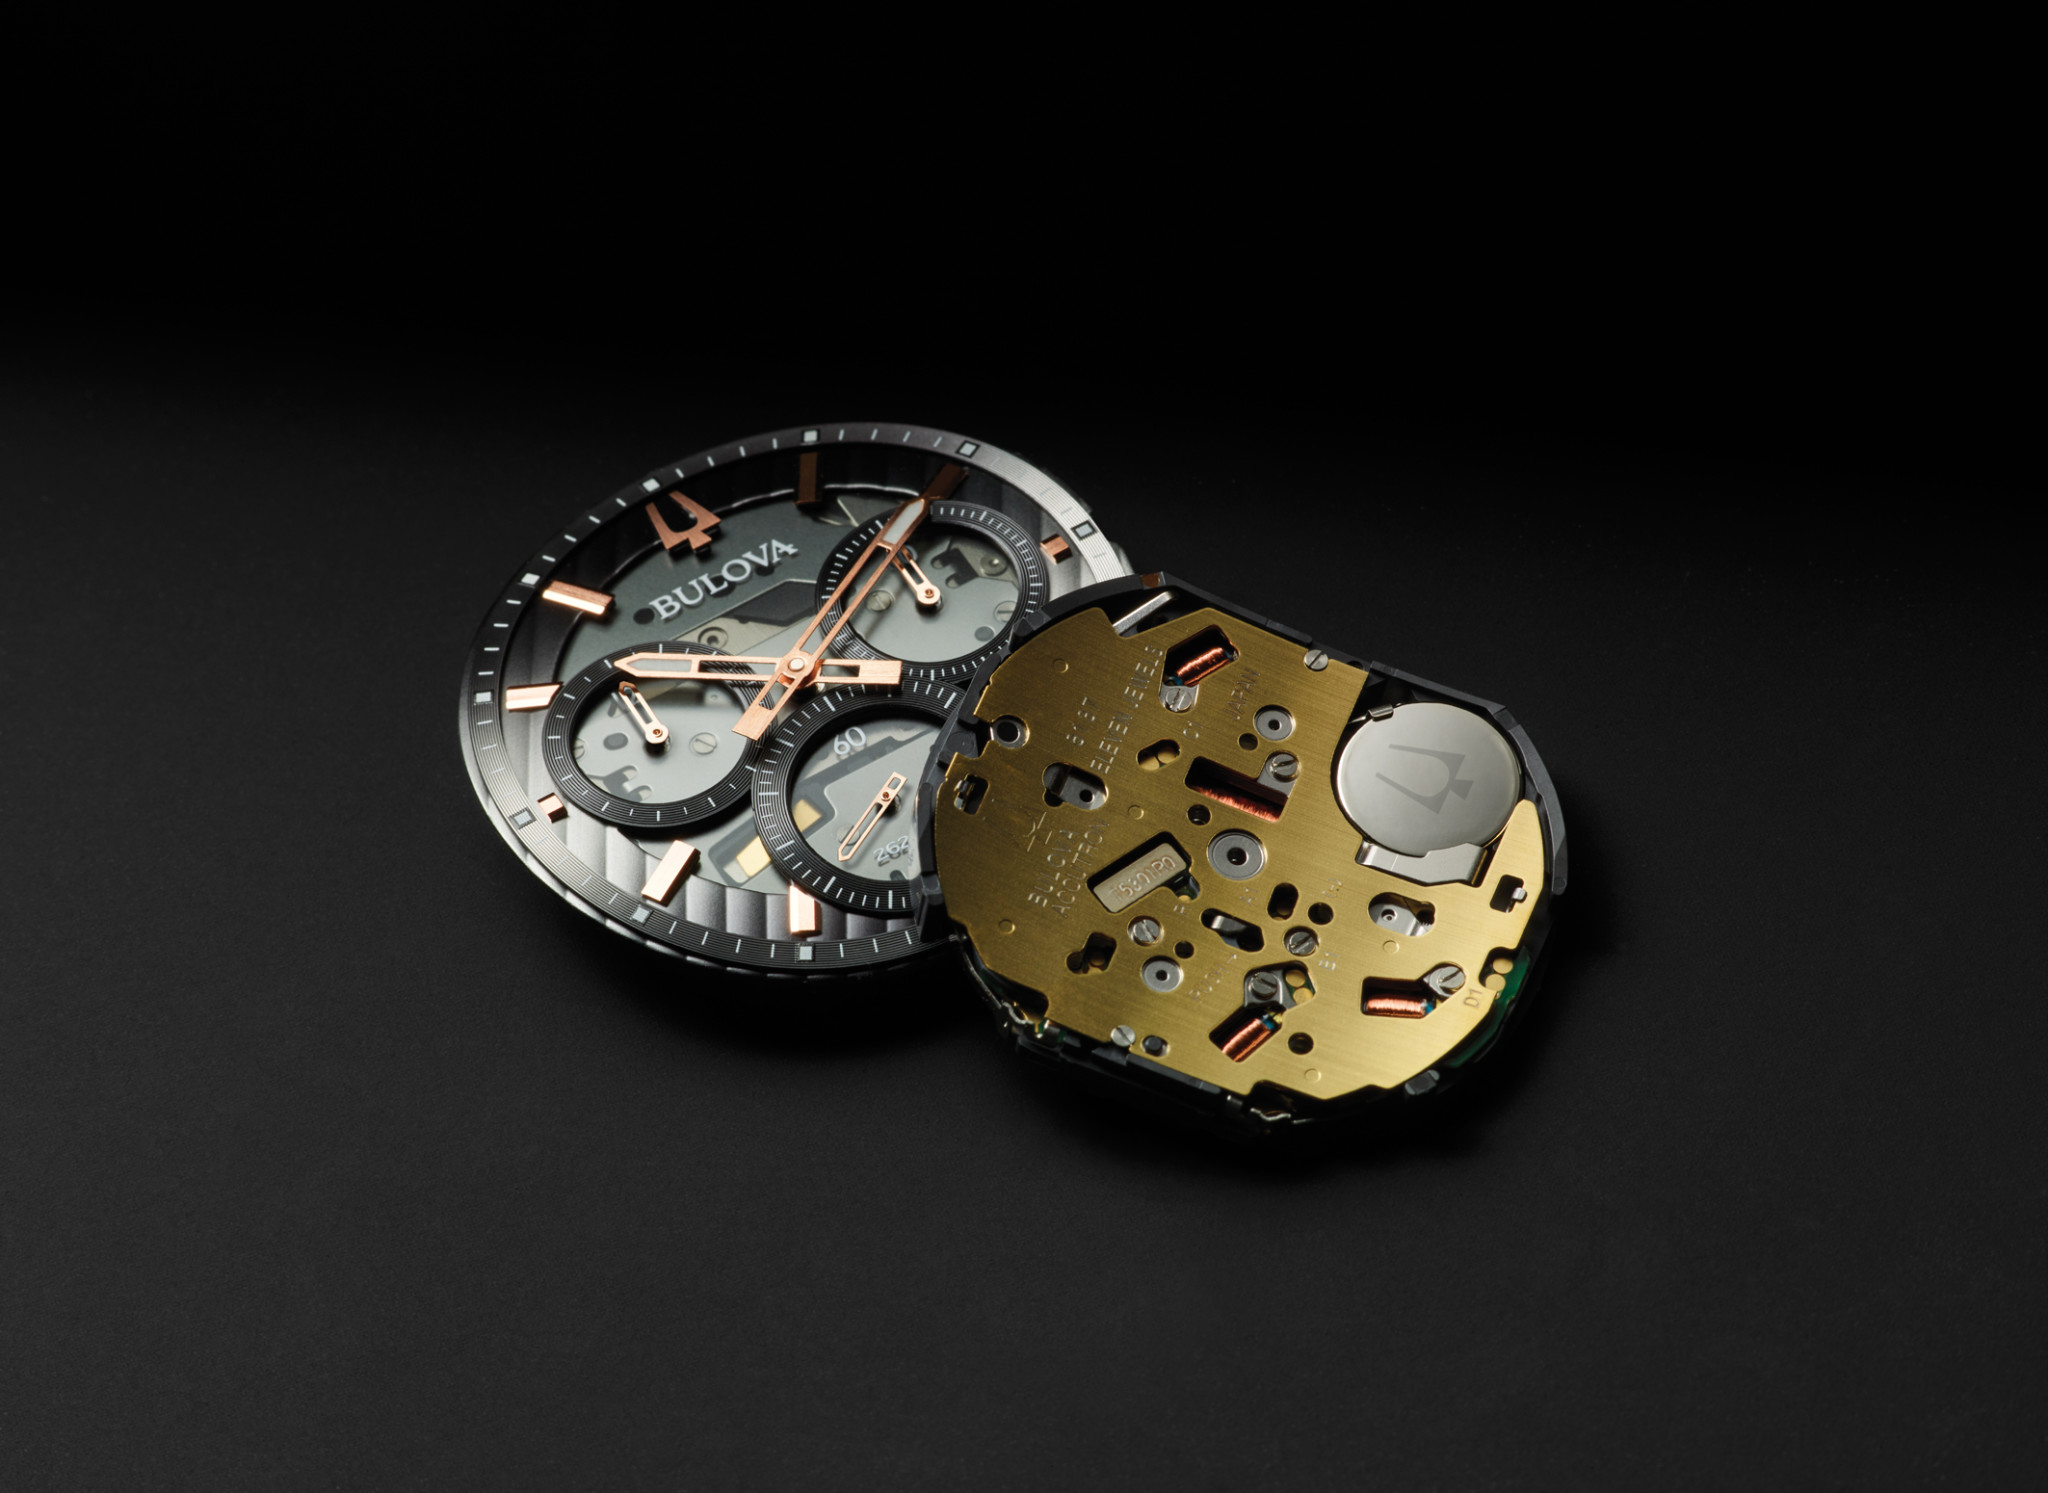 CURV Chronograph The Wristwatch Redefines Bulova